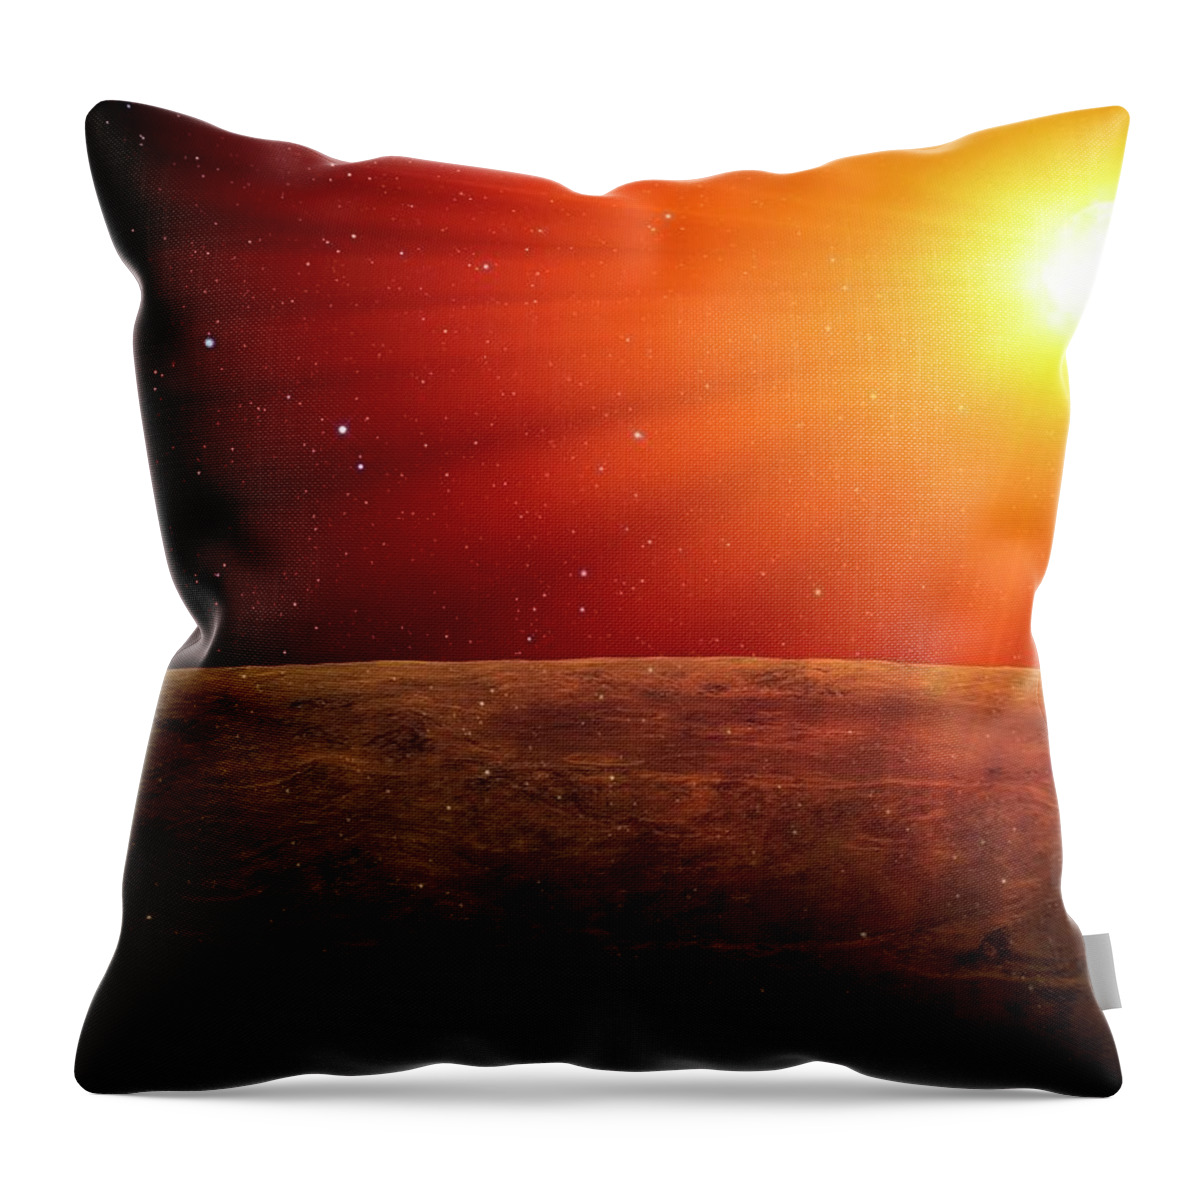 Shadow Throw Pillow featuring the digital art Alien Planet, Artwork by Andrzej Wojcicki